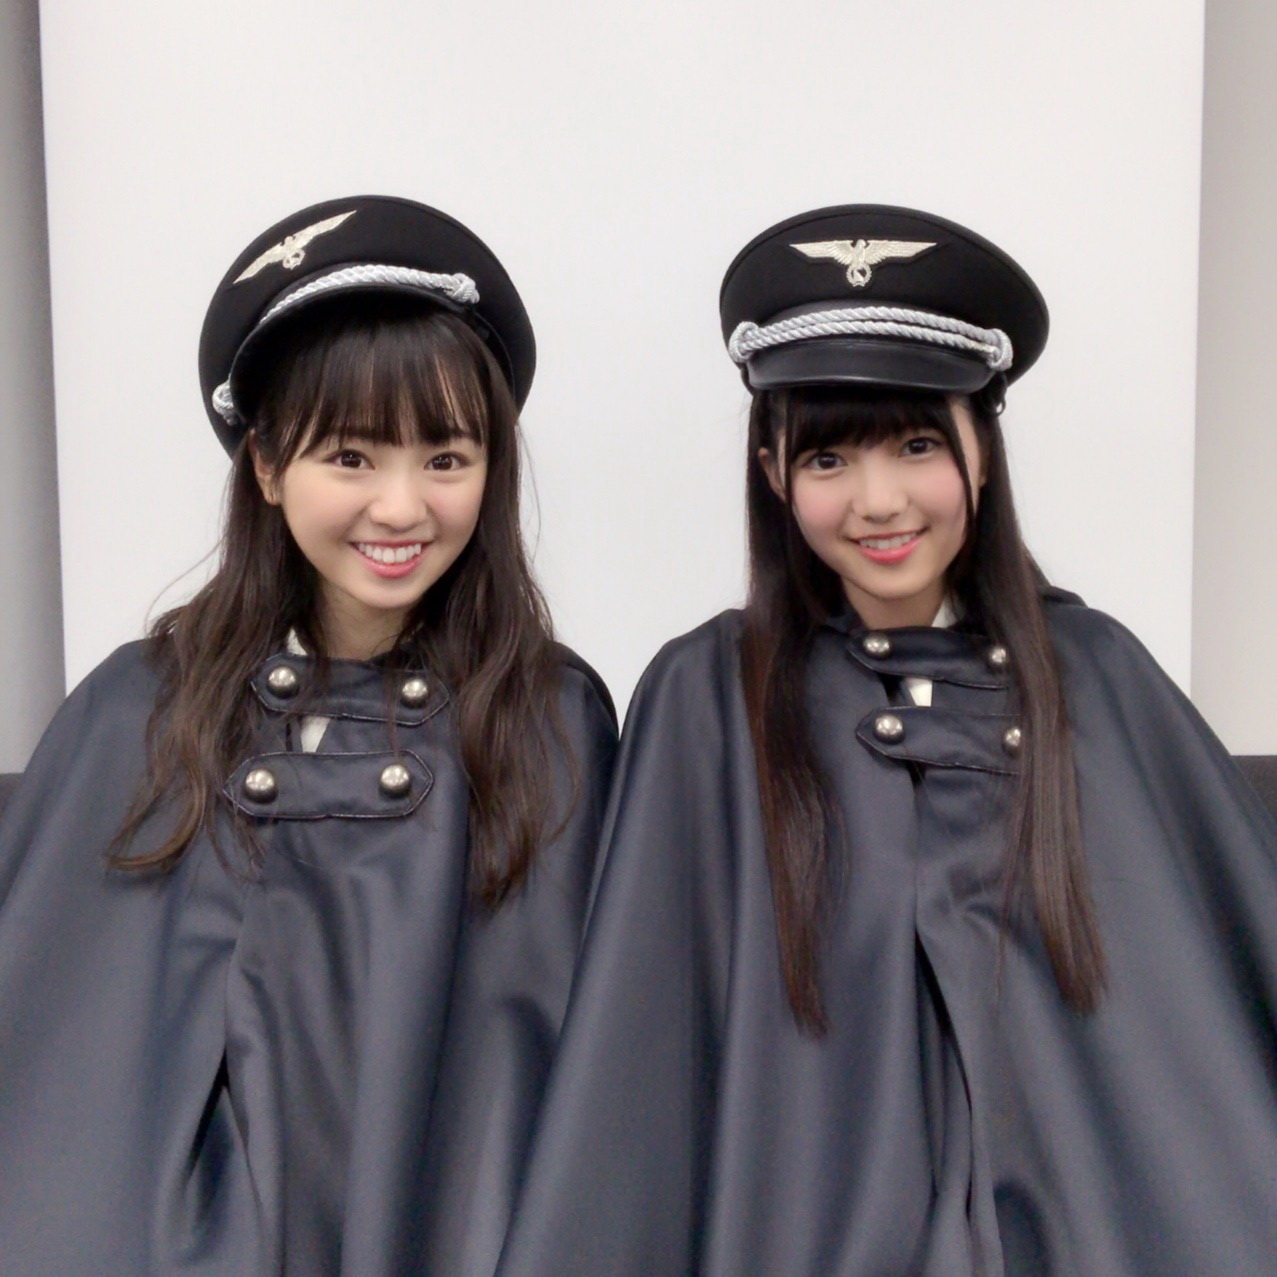 Japanese Idols Dress As Nazis For Halloween